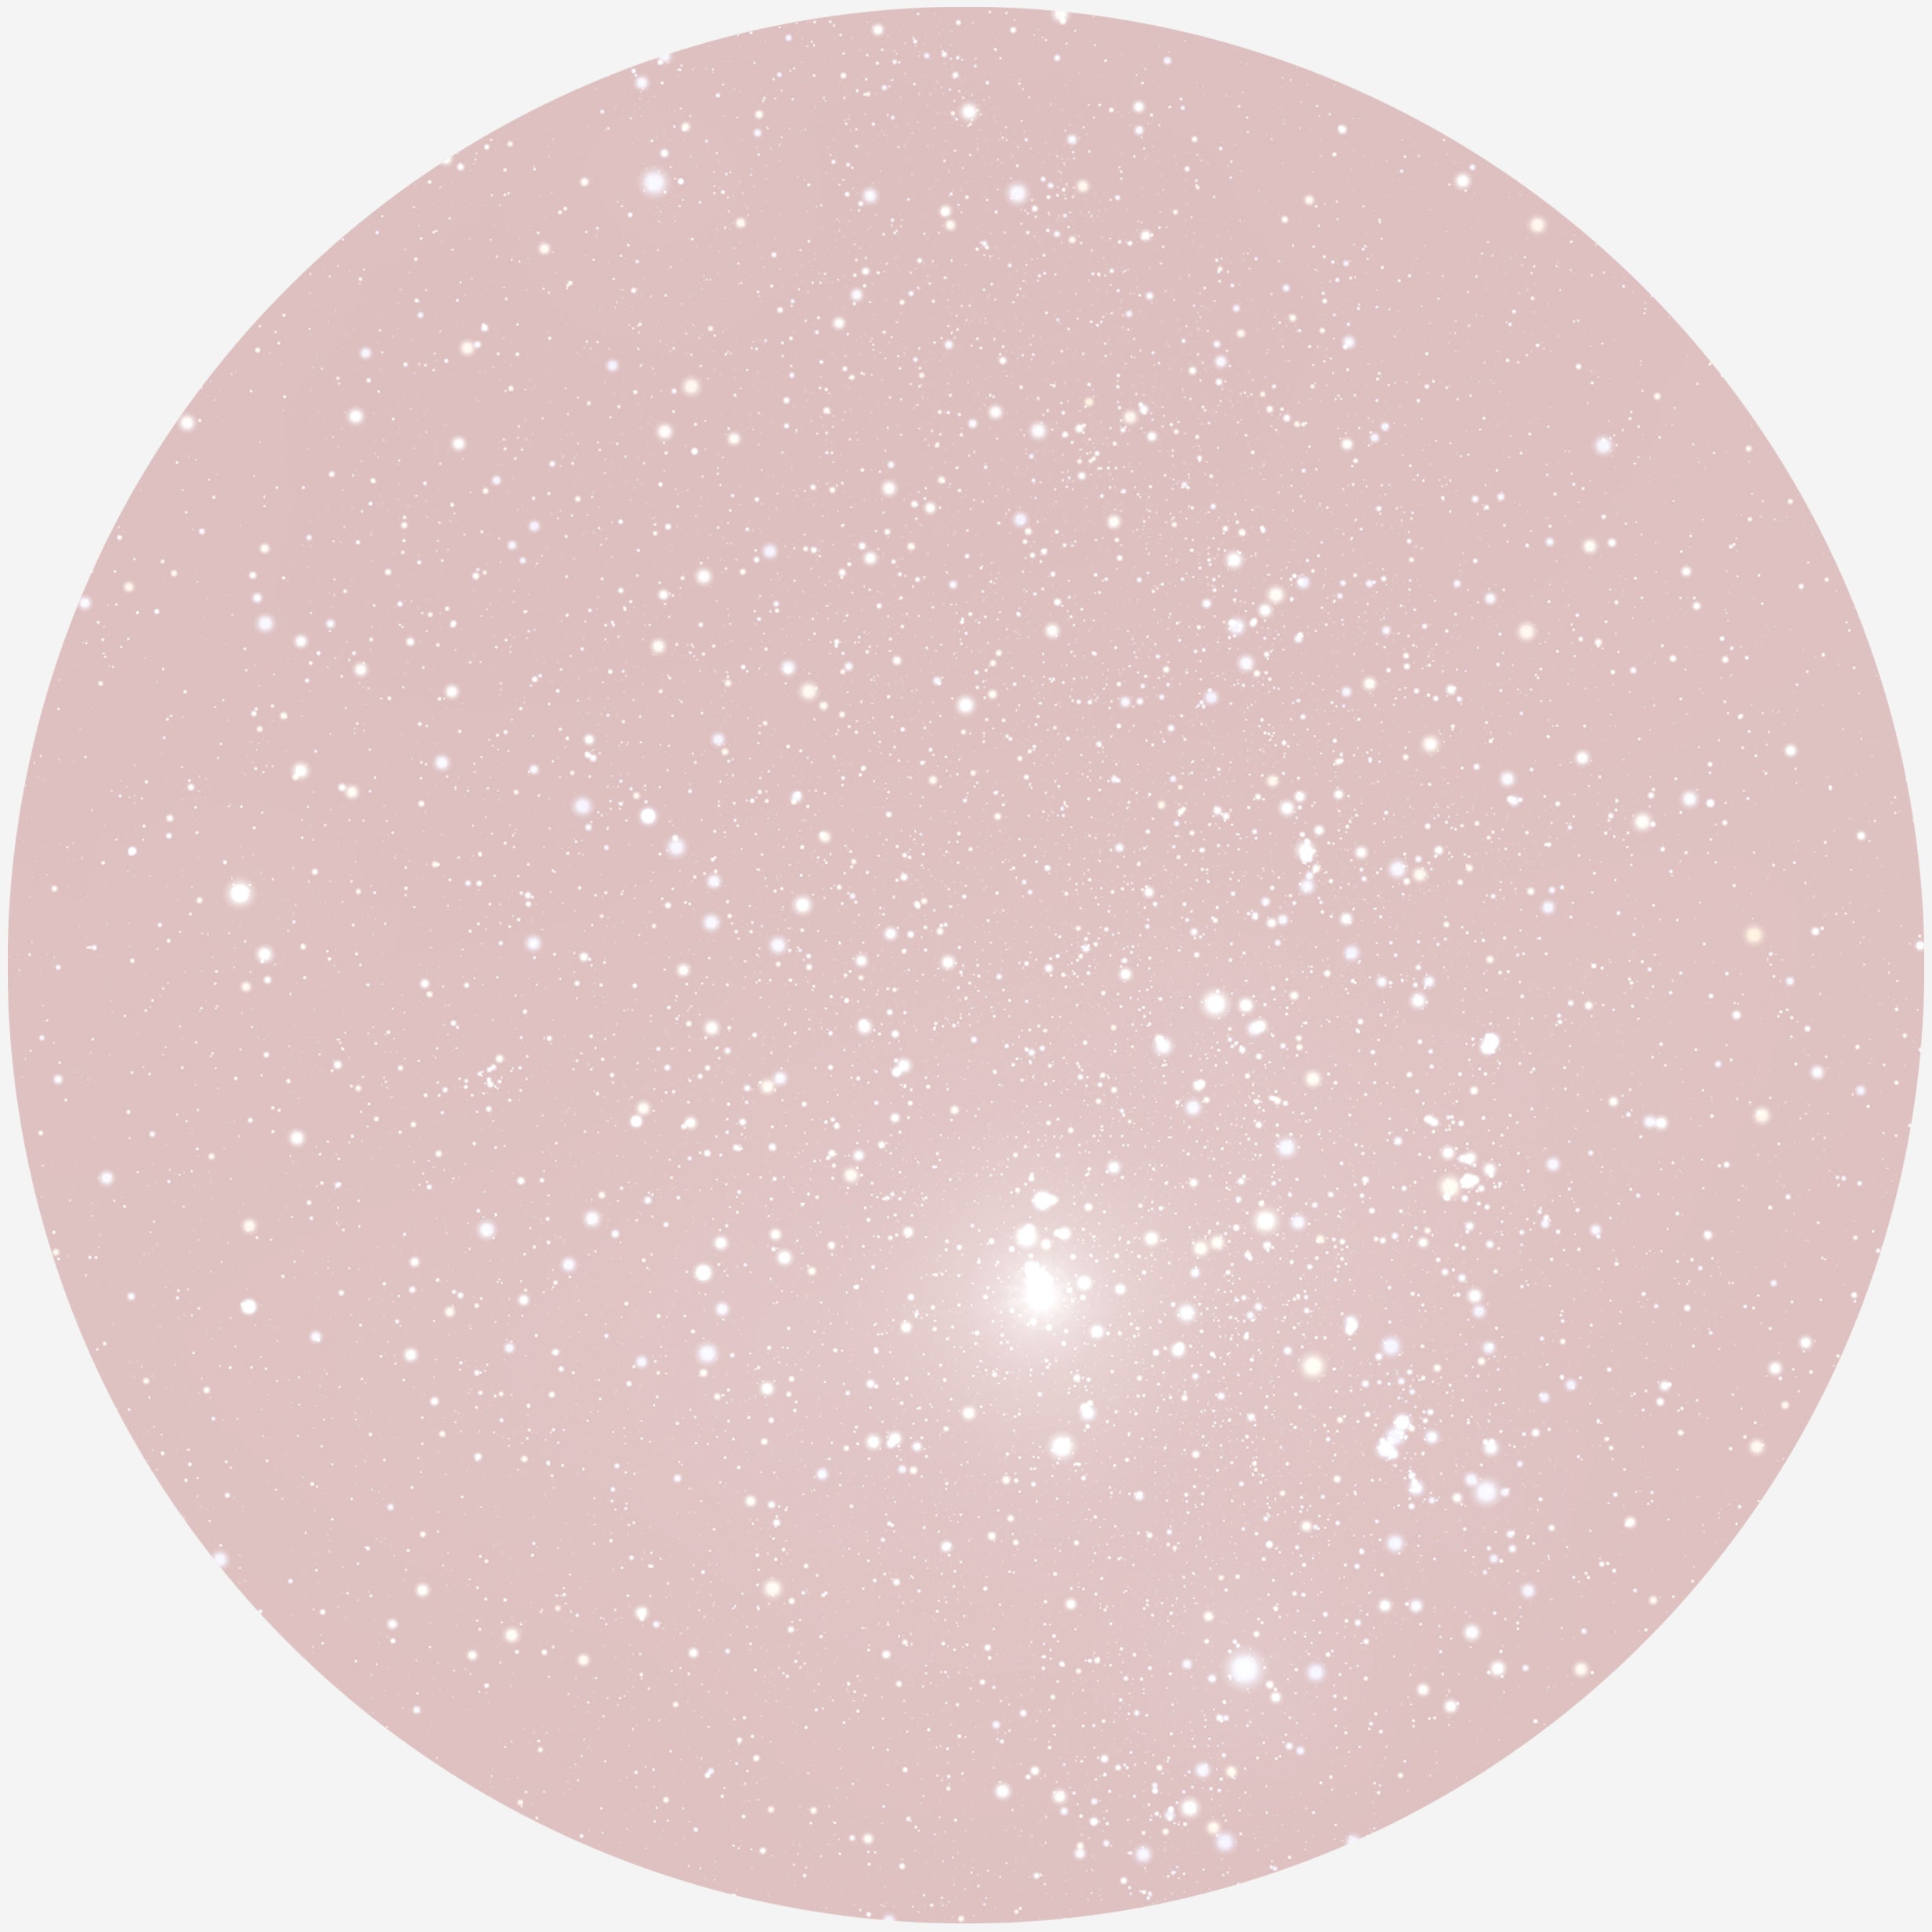 Se RUND PLAKAT MED PERSONLIG STJERNEHIMMEL (LYSERØD) - 20 cm / Klar stjernehimmel hos KISPUS